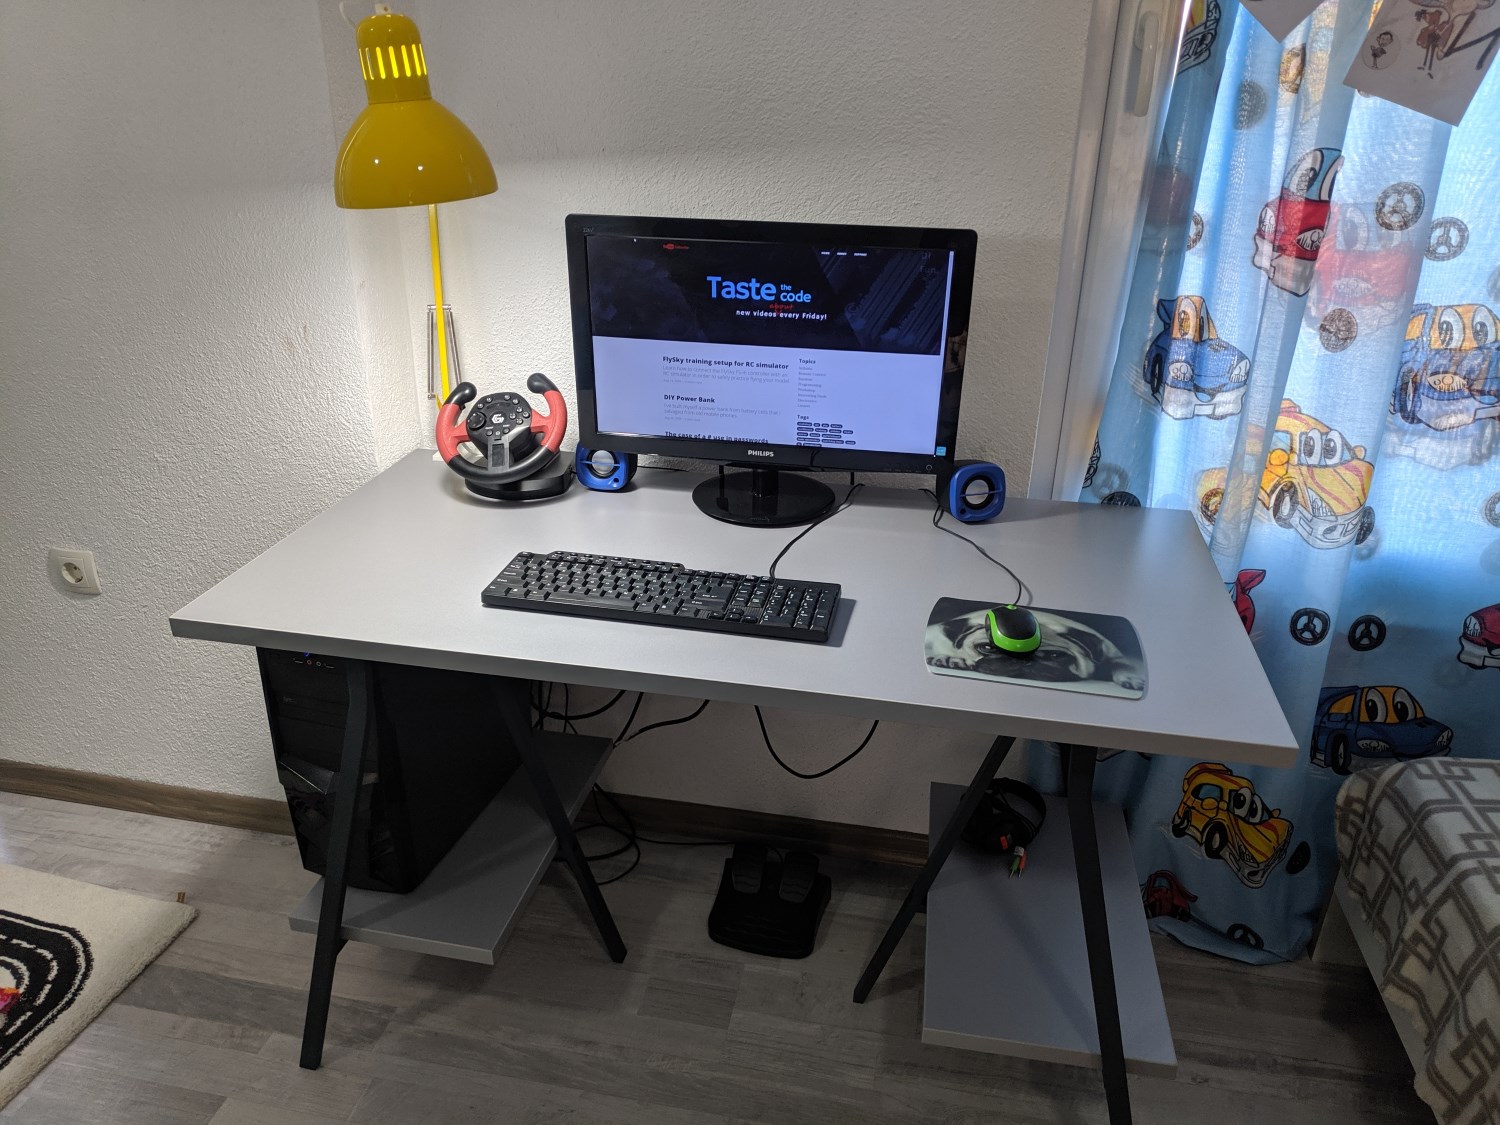 The finished desk